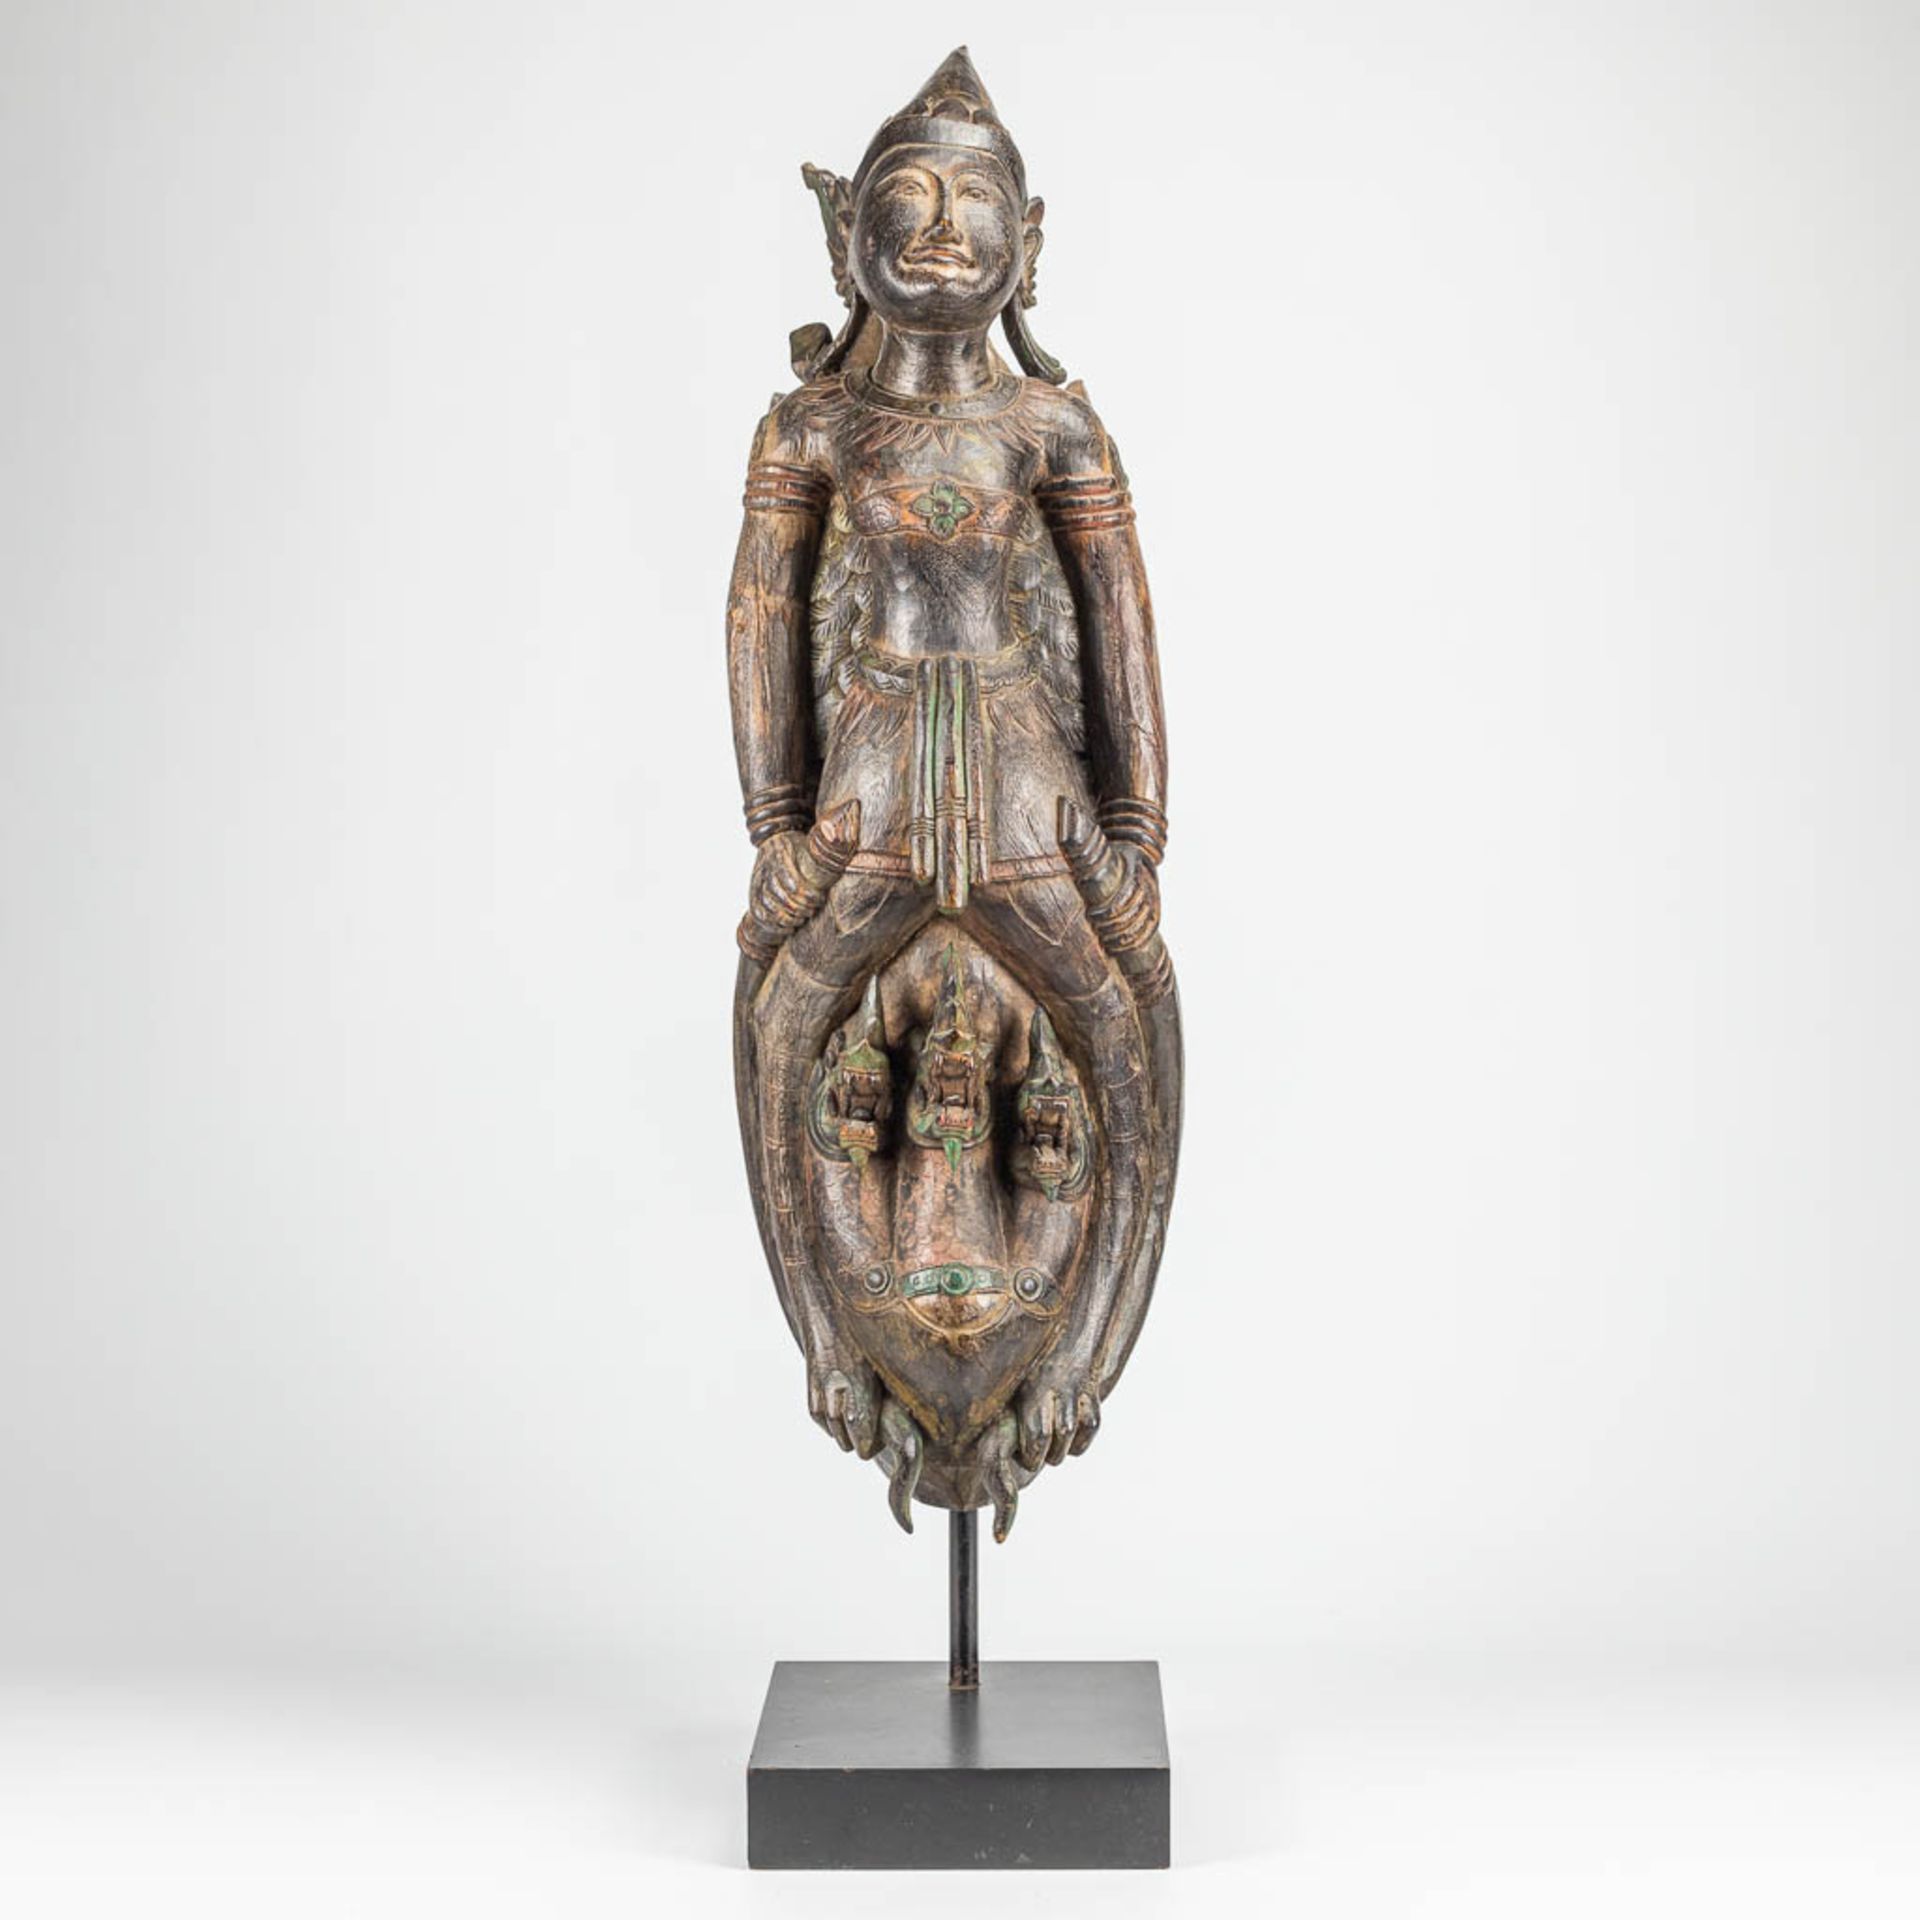 A large oriental sculptured statue of a mythological figurine.